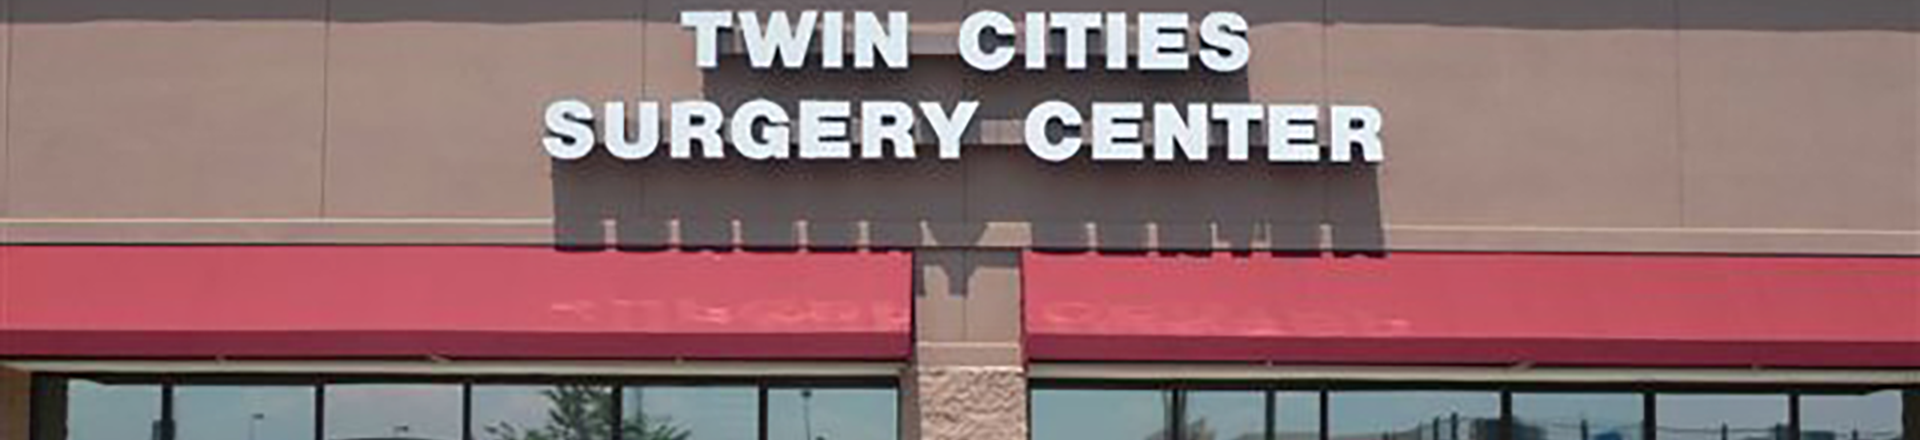 Twin Cities Surgery Center